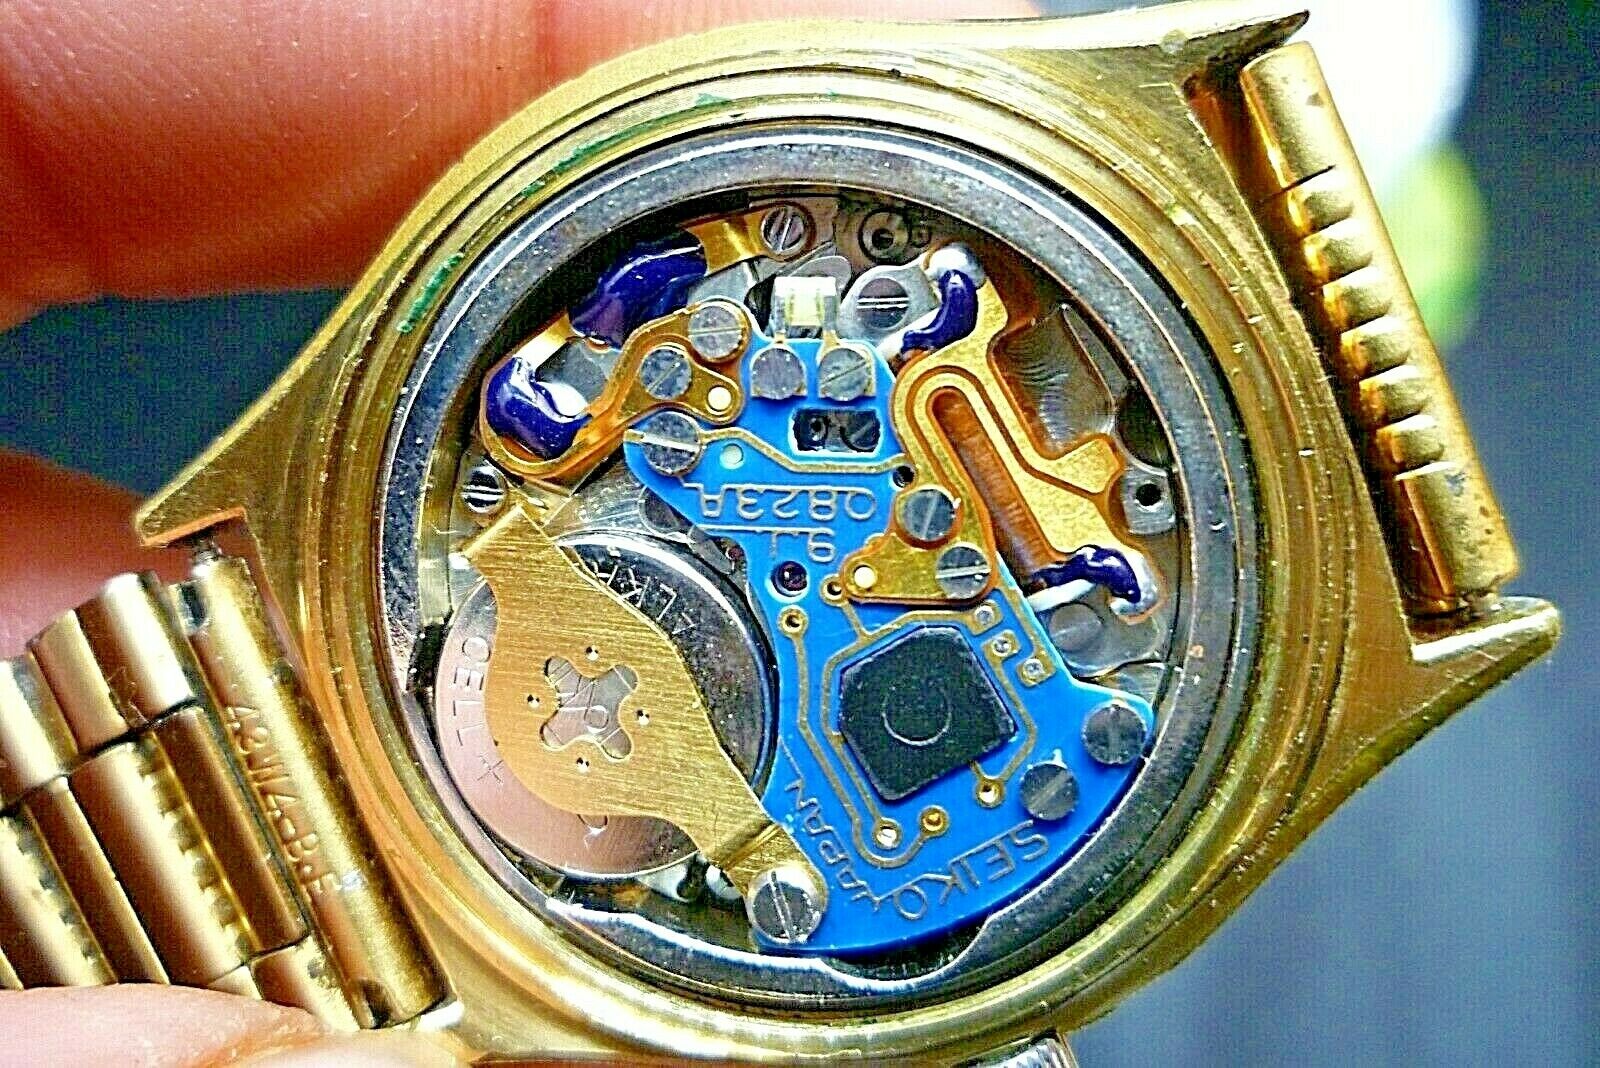 Mens Gold 36mm SEIKO QT 9j 0823-7000 1975 Vintage Quartz Watch